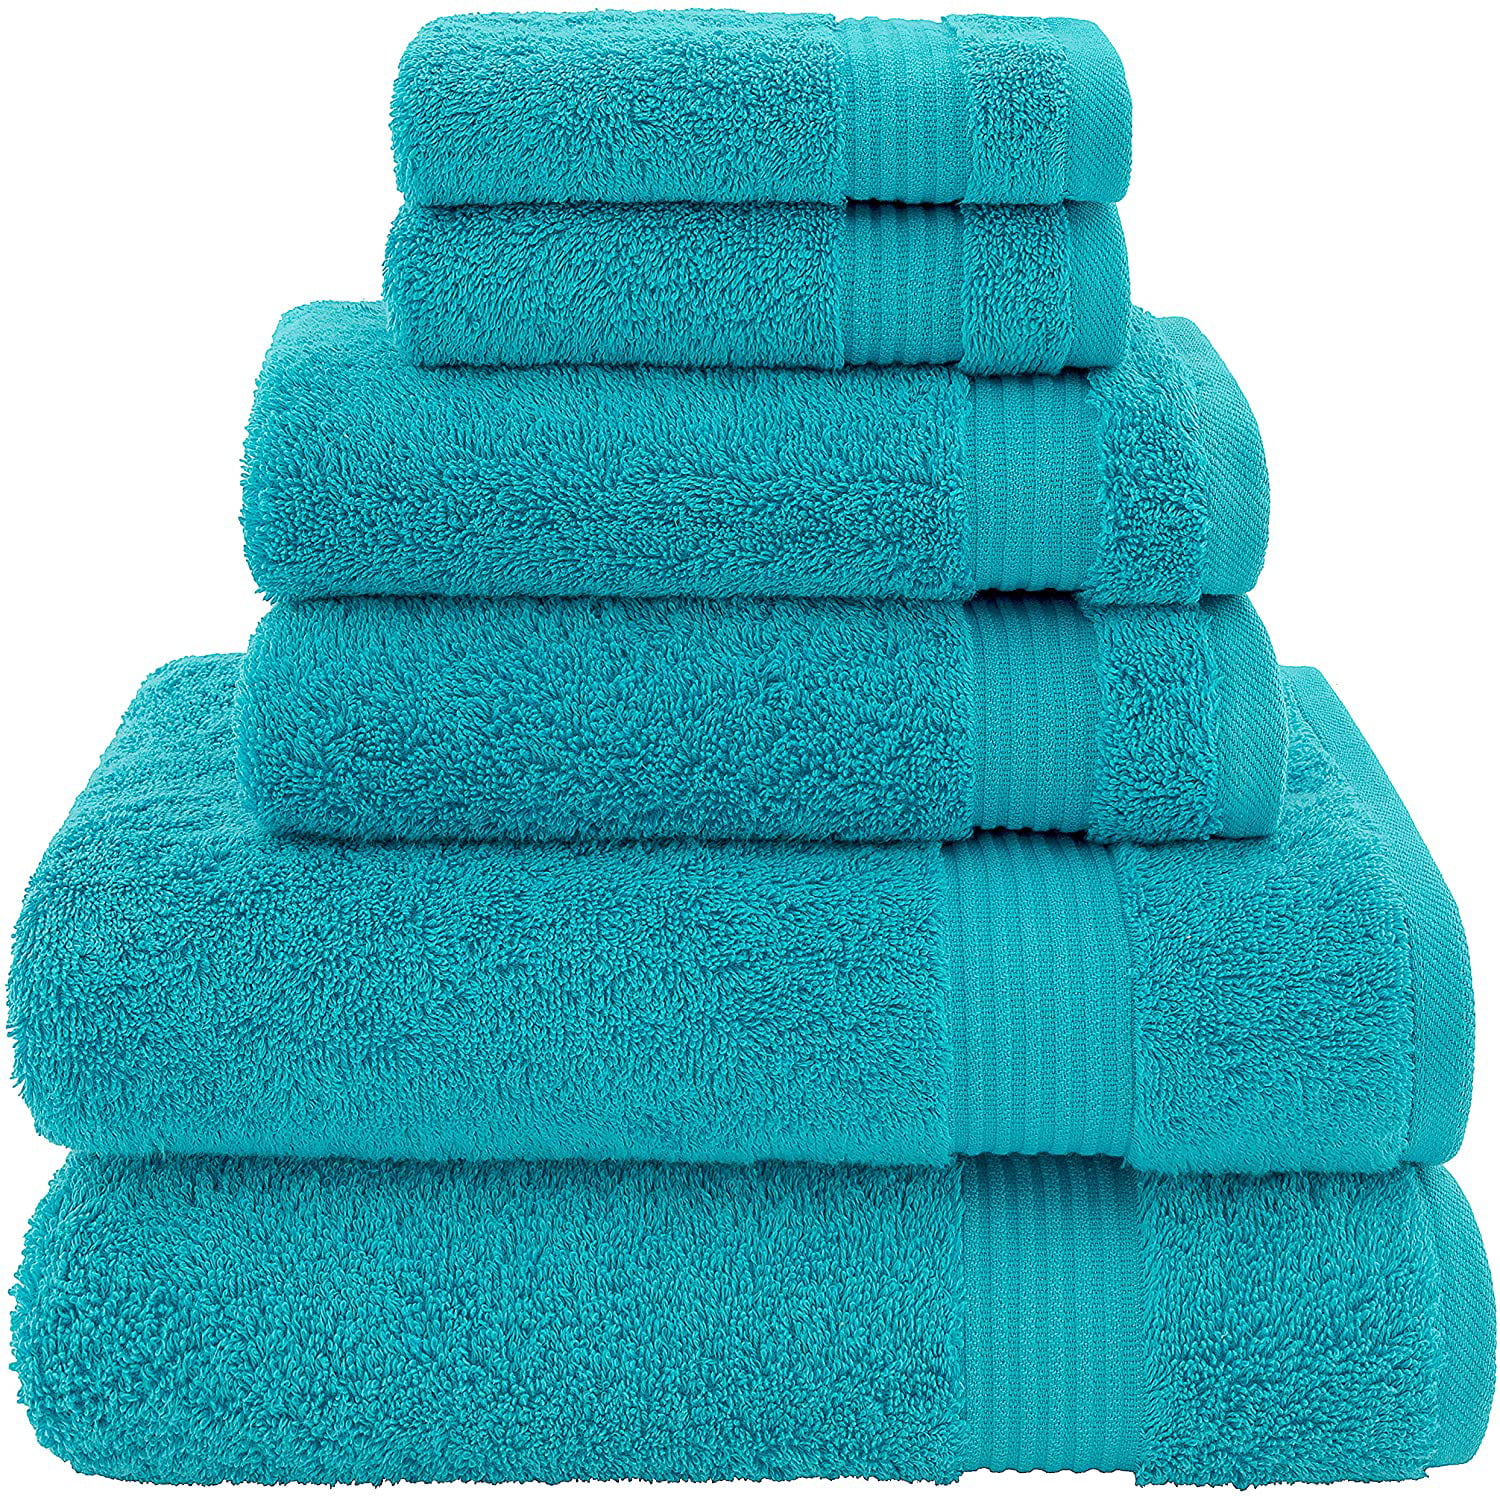 Shower 6 Piece Bath Towel Set for Bathroom Spa Soft and Absorbent 